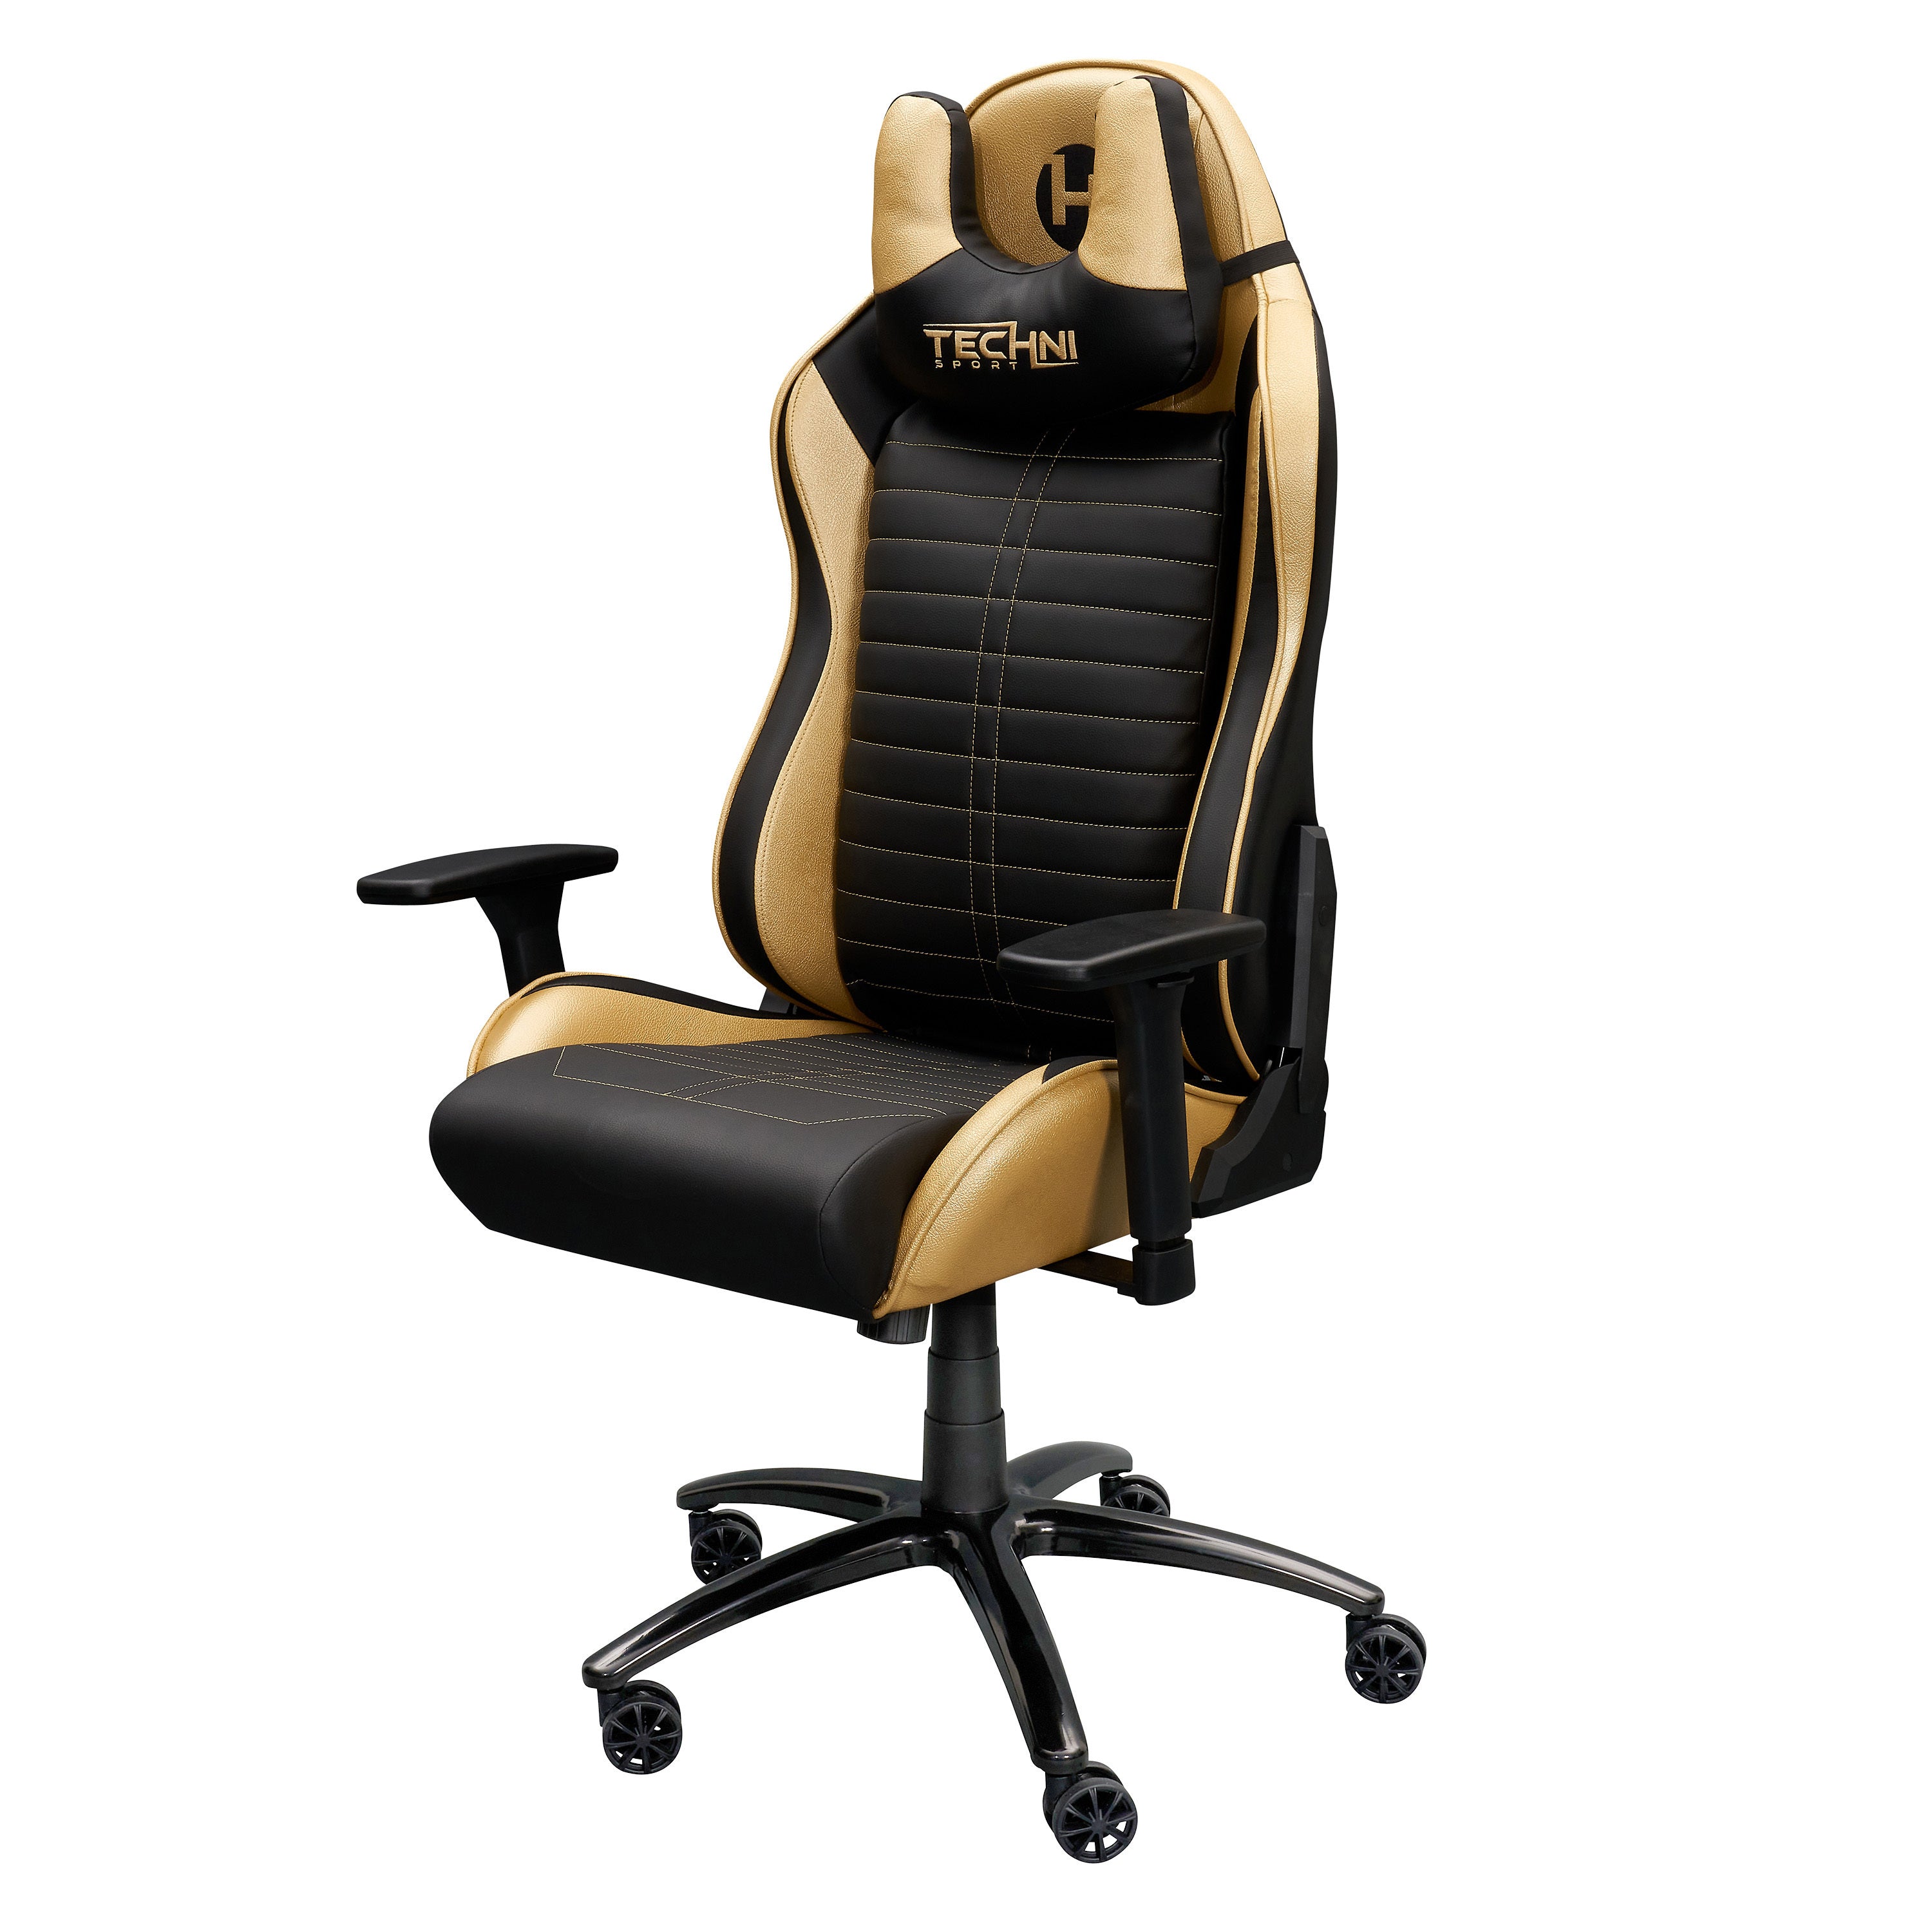 Techni Sport Ergonomic Racing Style Gaming Chair (Gold)